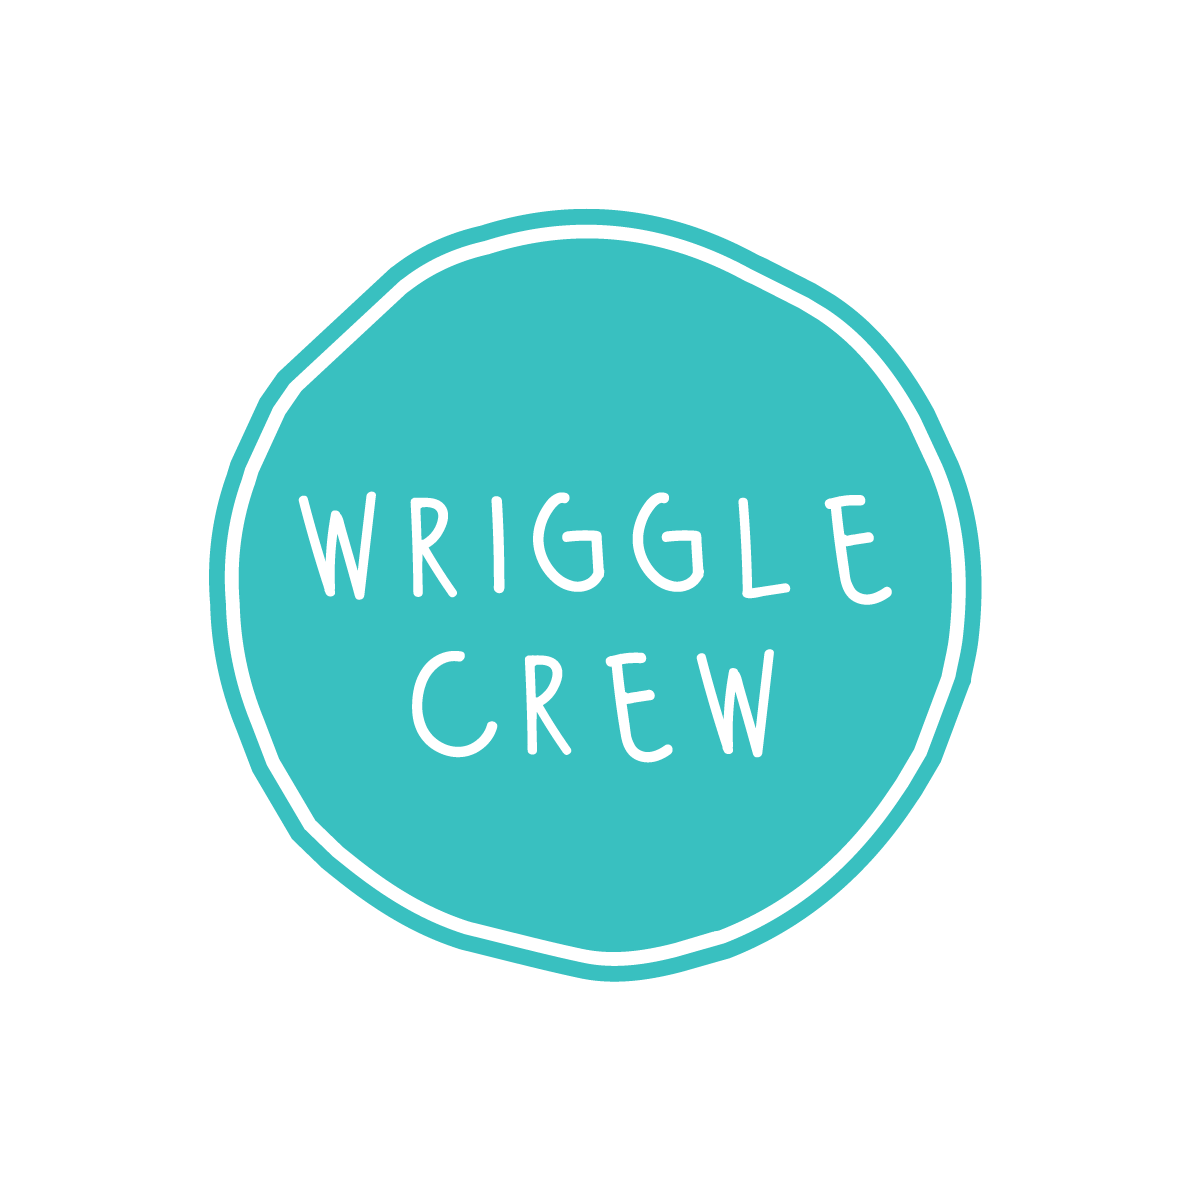 Wriggle Crew